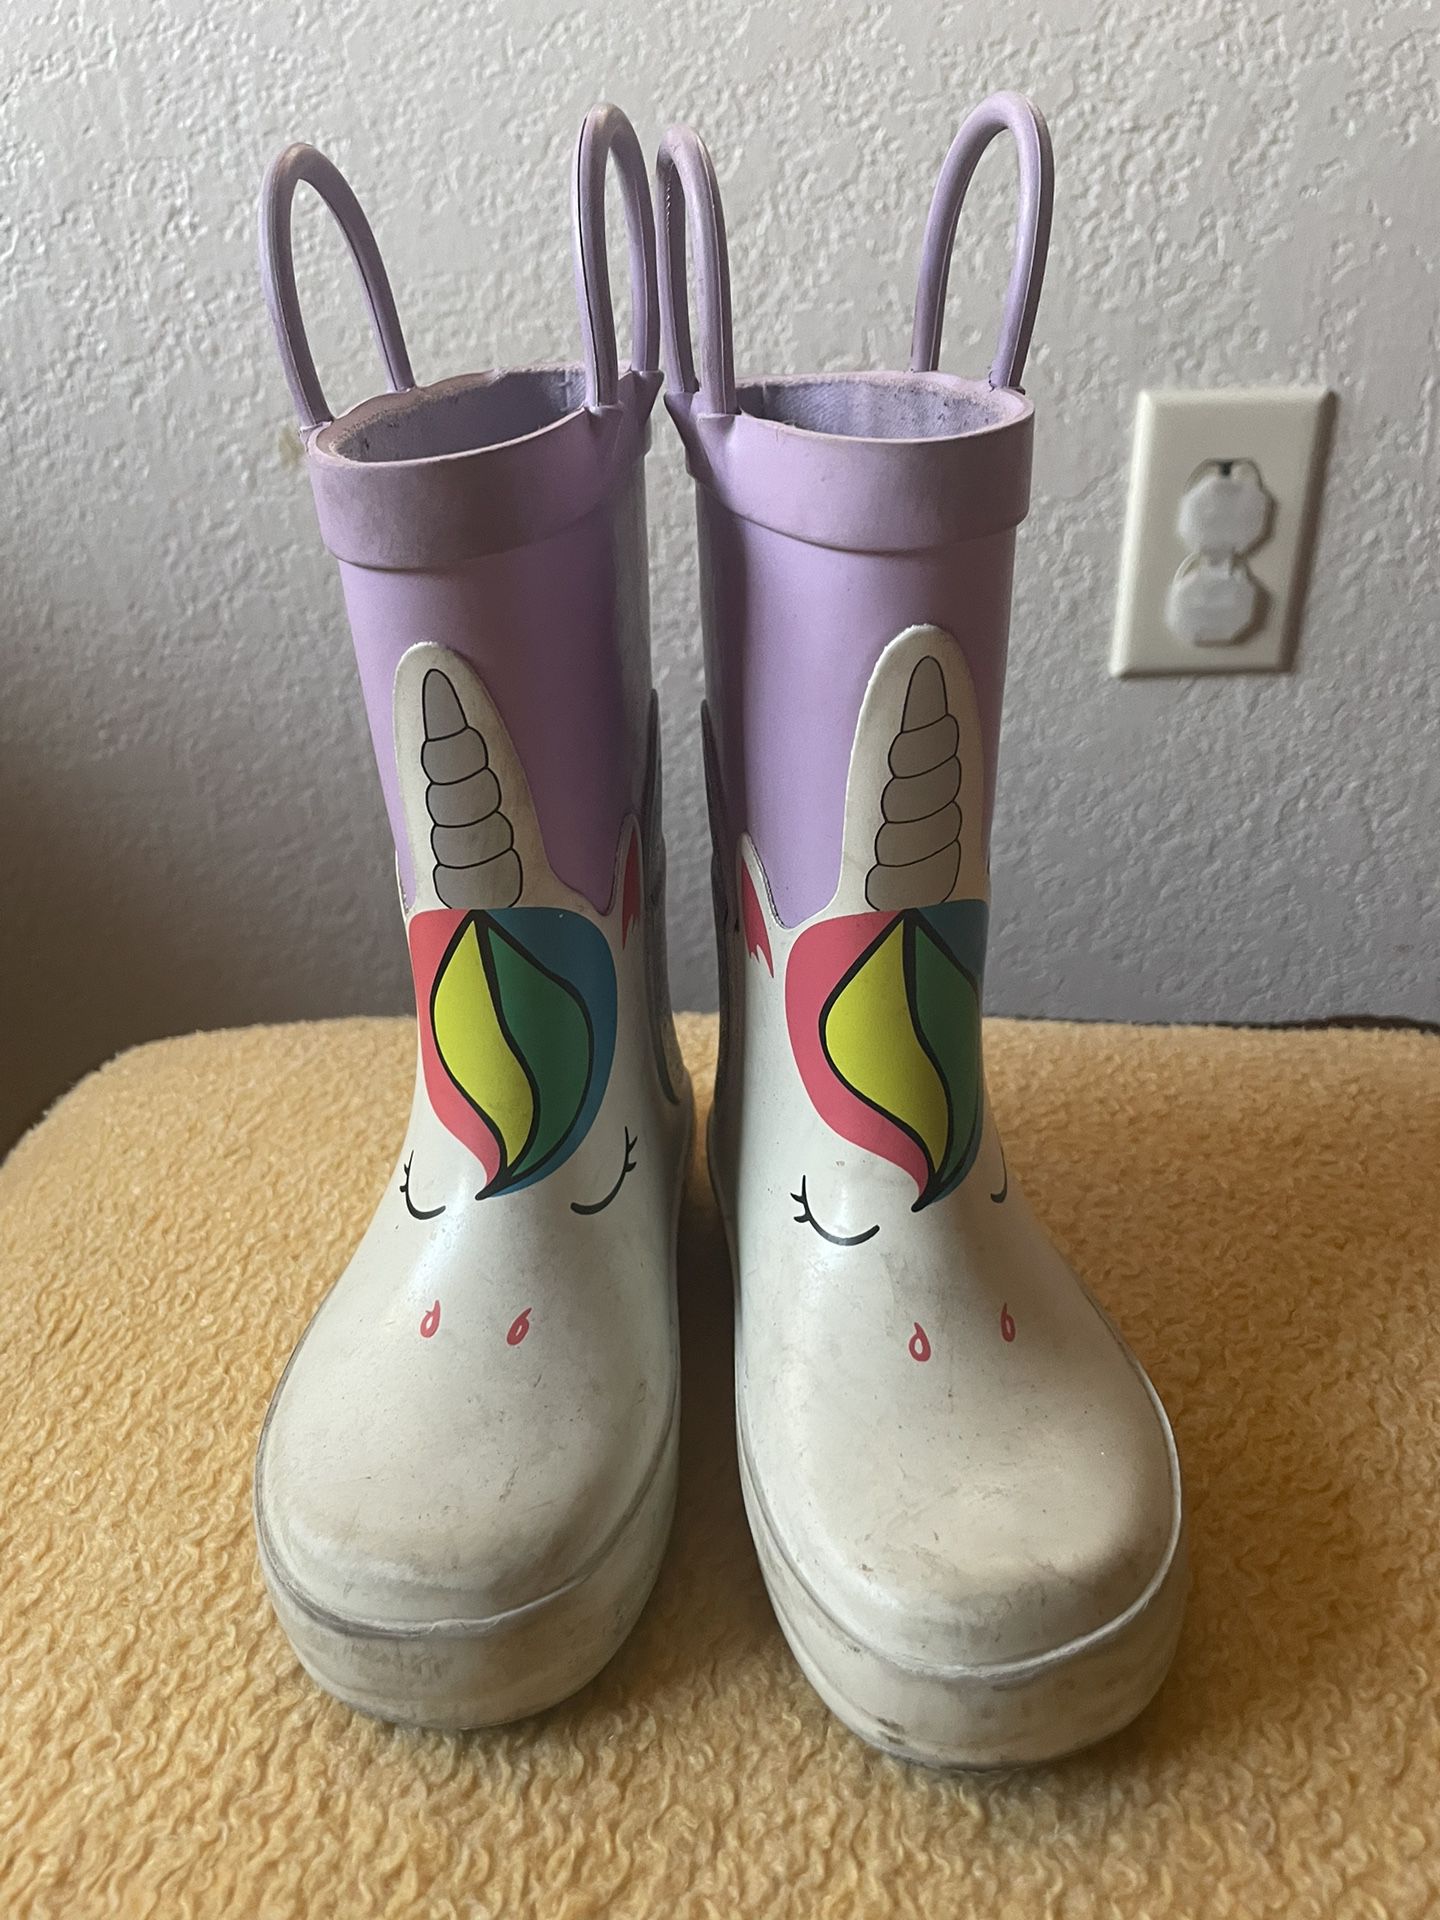 TARGET Brand Kids Girl’s Rain Boots Size 7